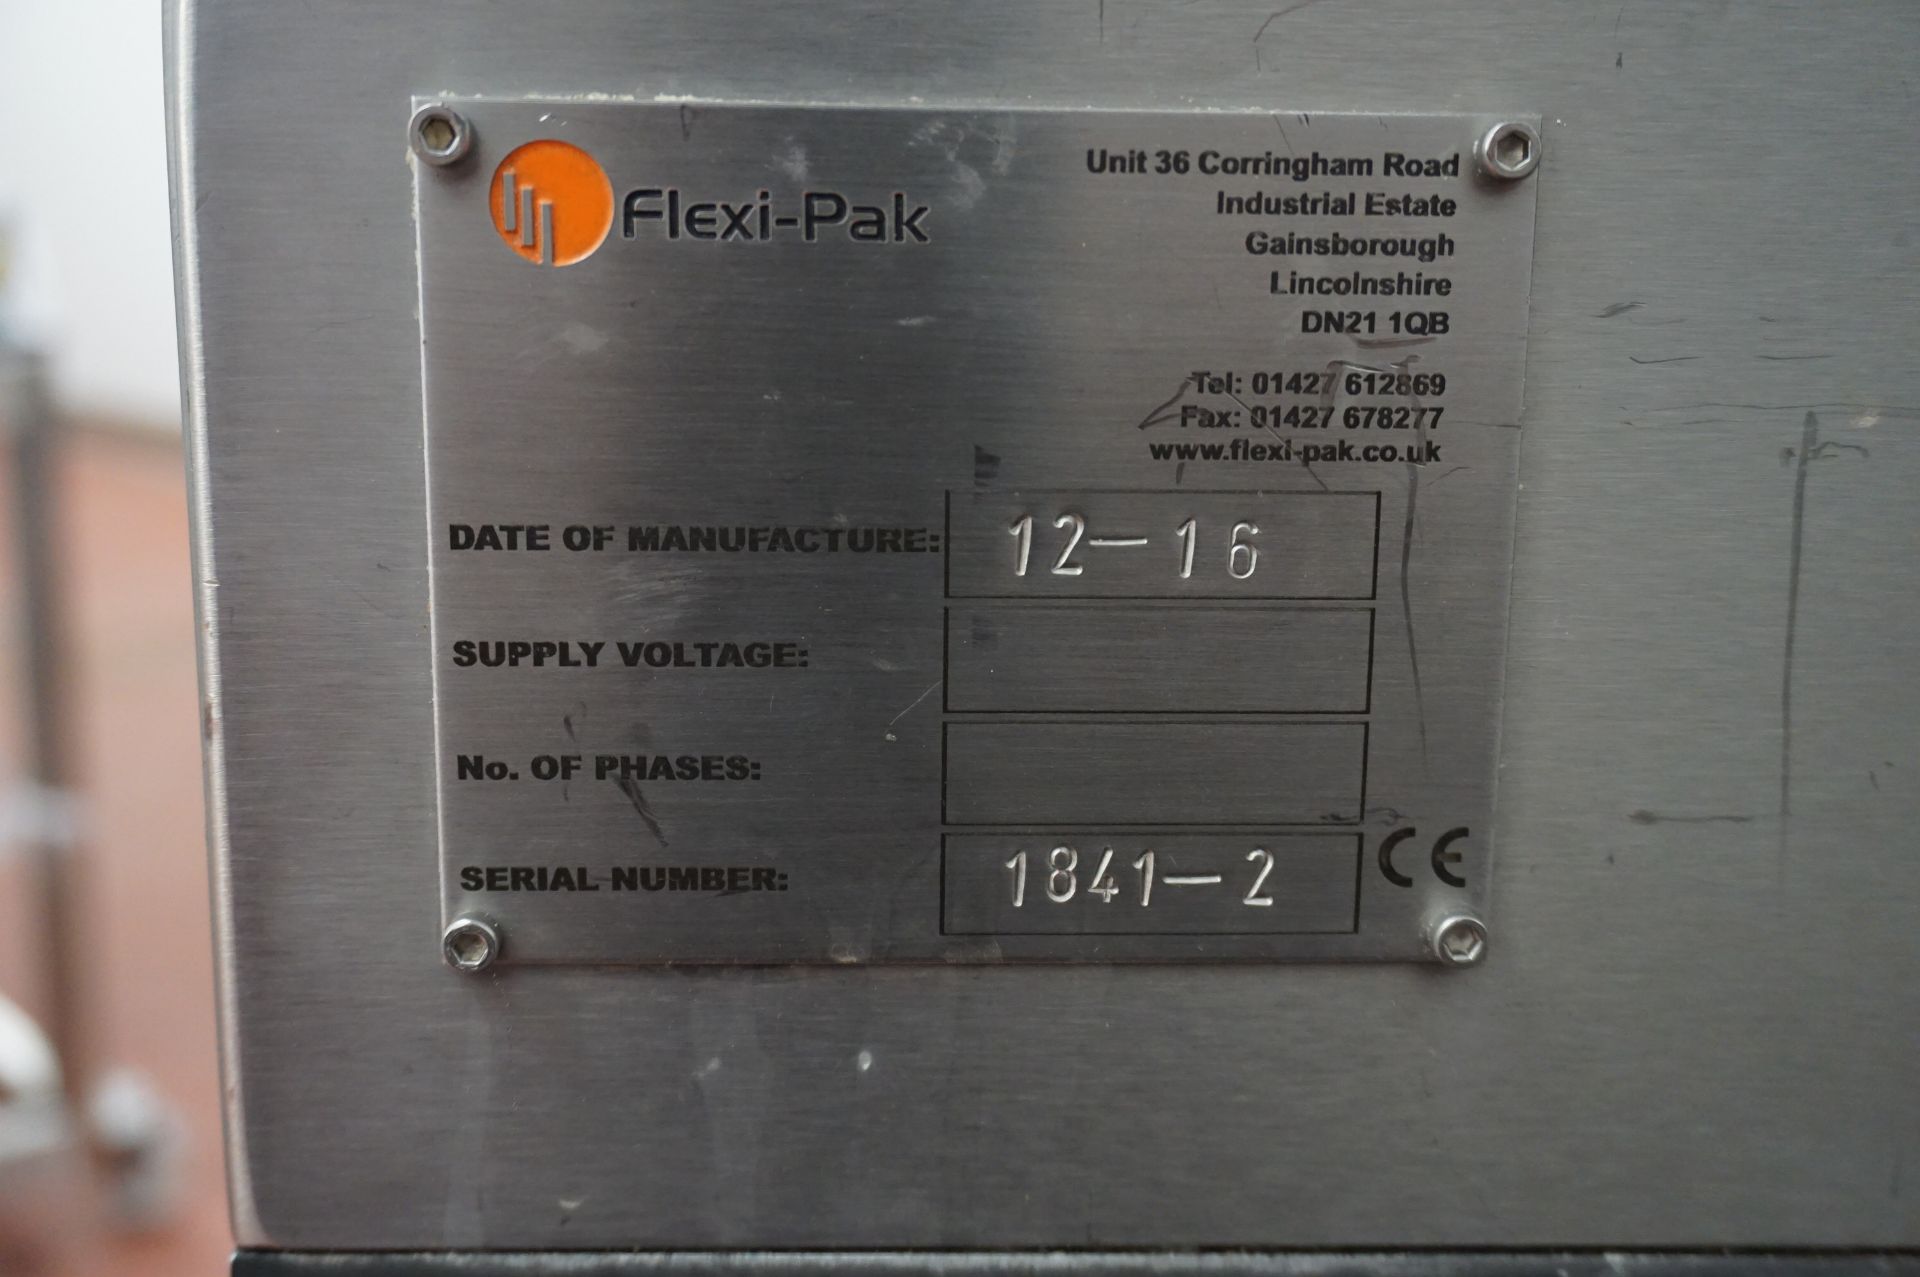 Flexi-Pak, mobile 8 lane pot dispenser, Serial No. 1841-2 (2016) - Image 3 of 3